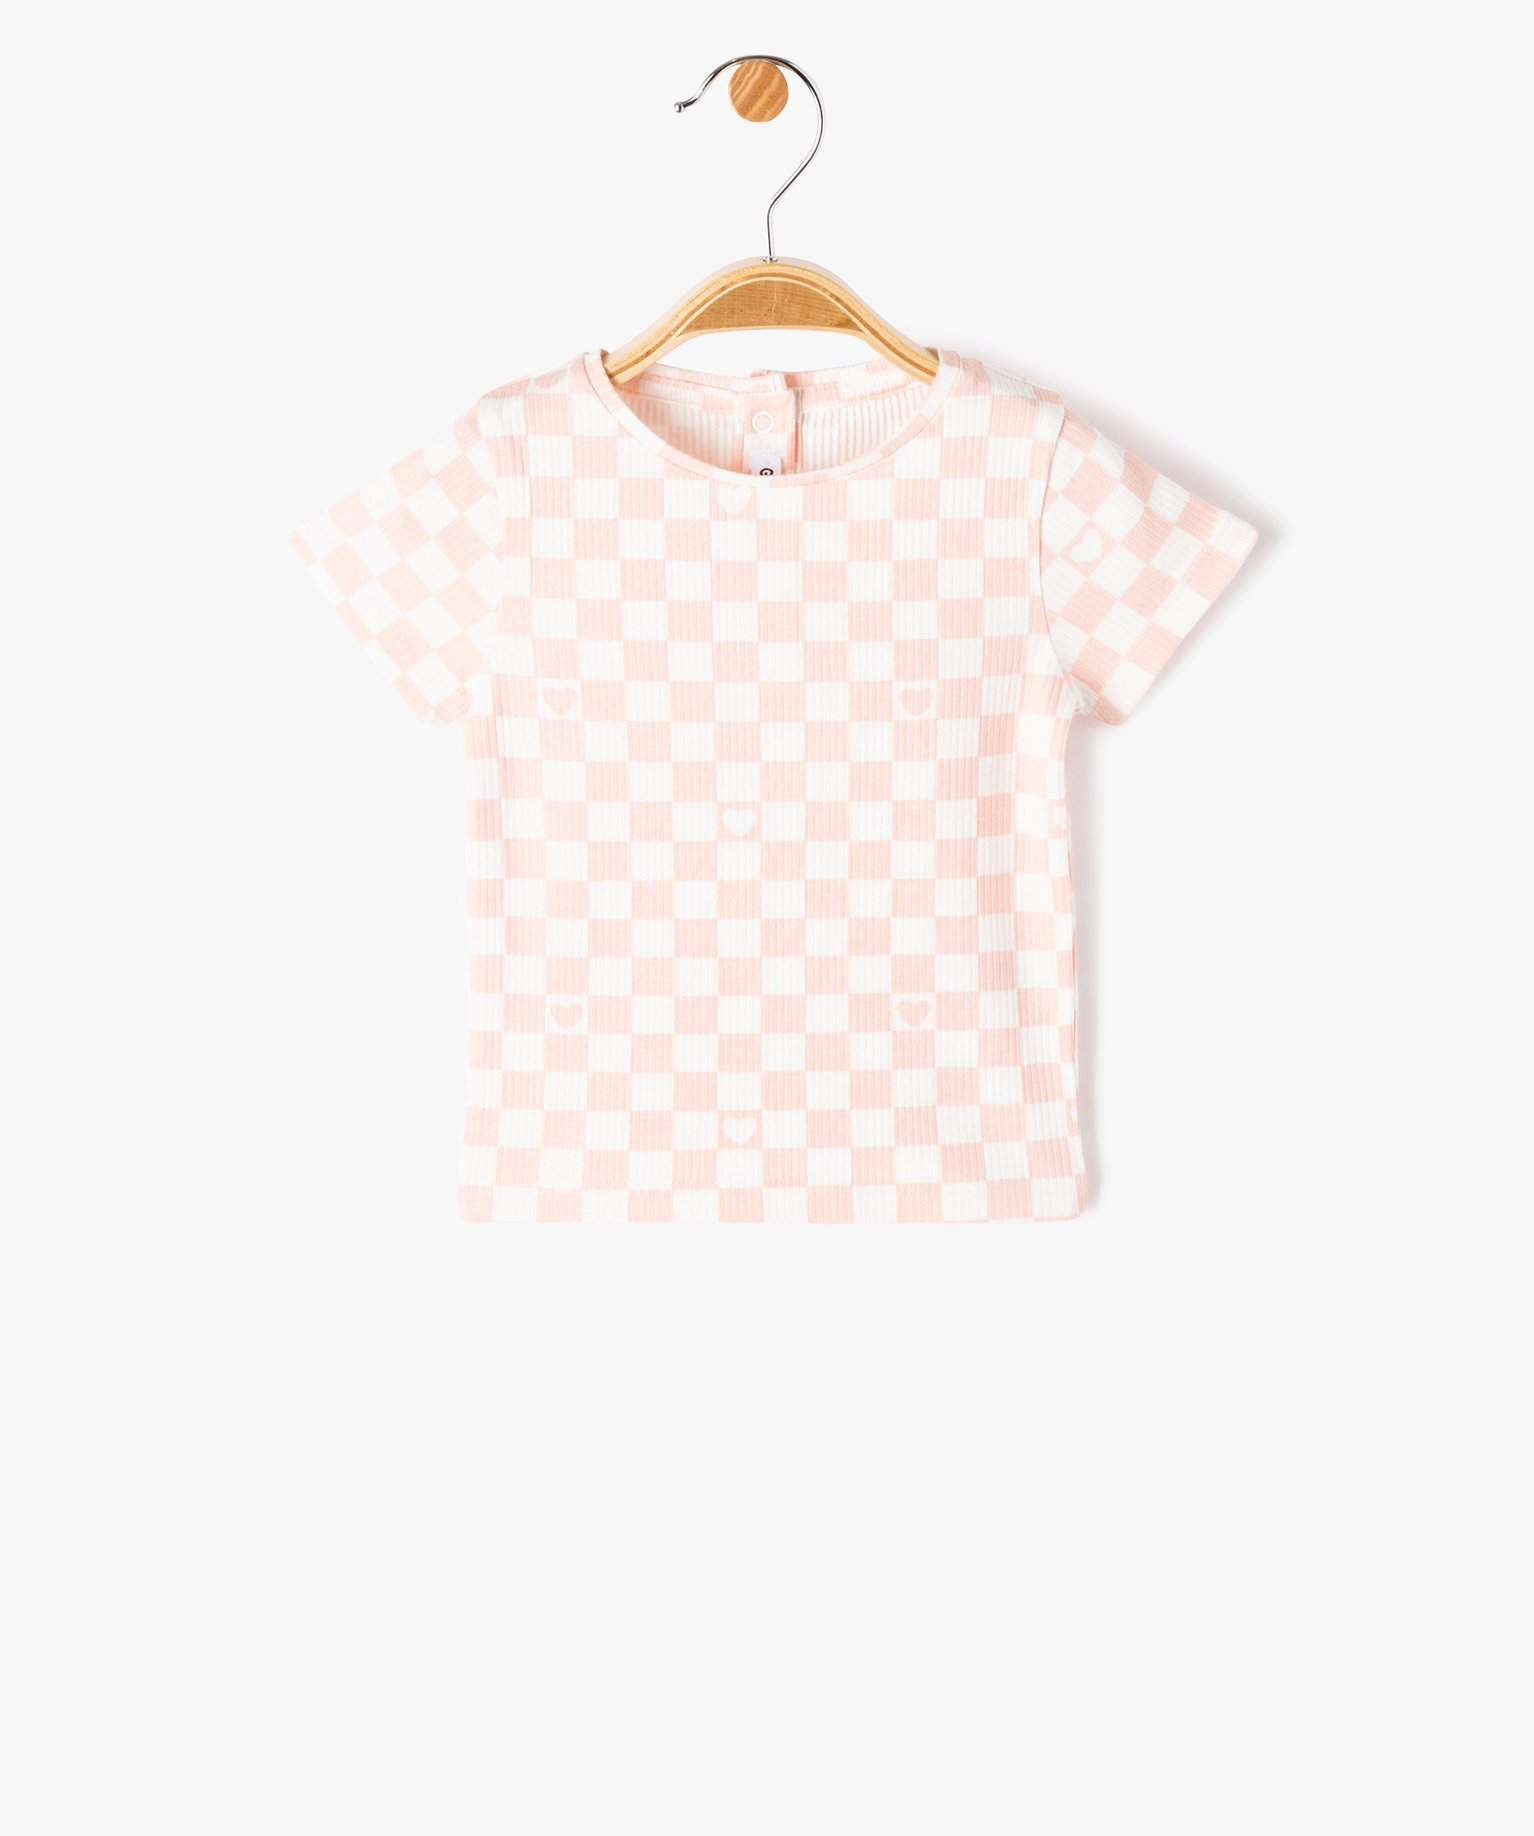 tee-shirt bebe fille a manches courtes en maille cotelee a carreaux rose